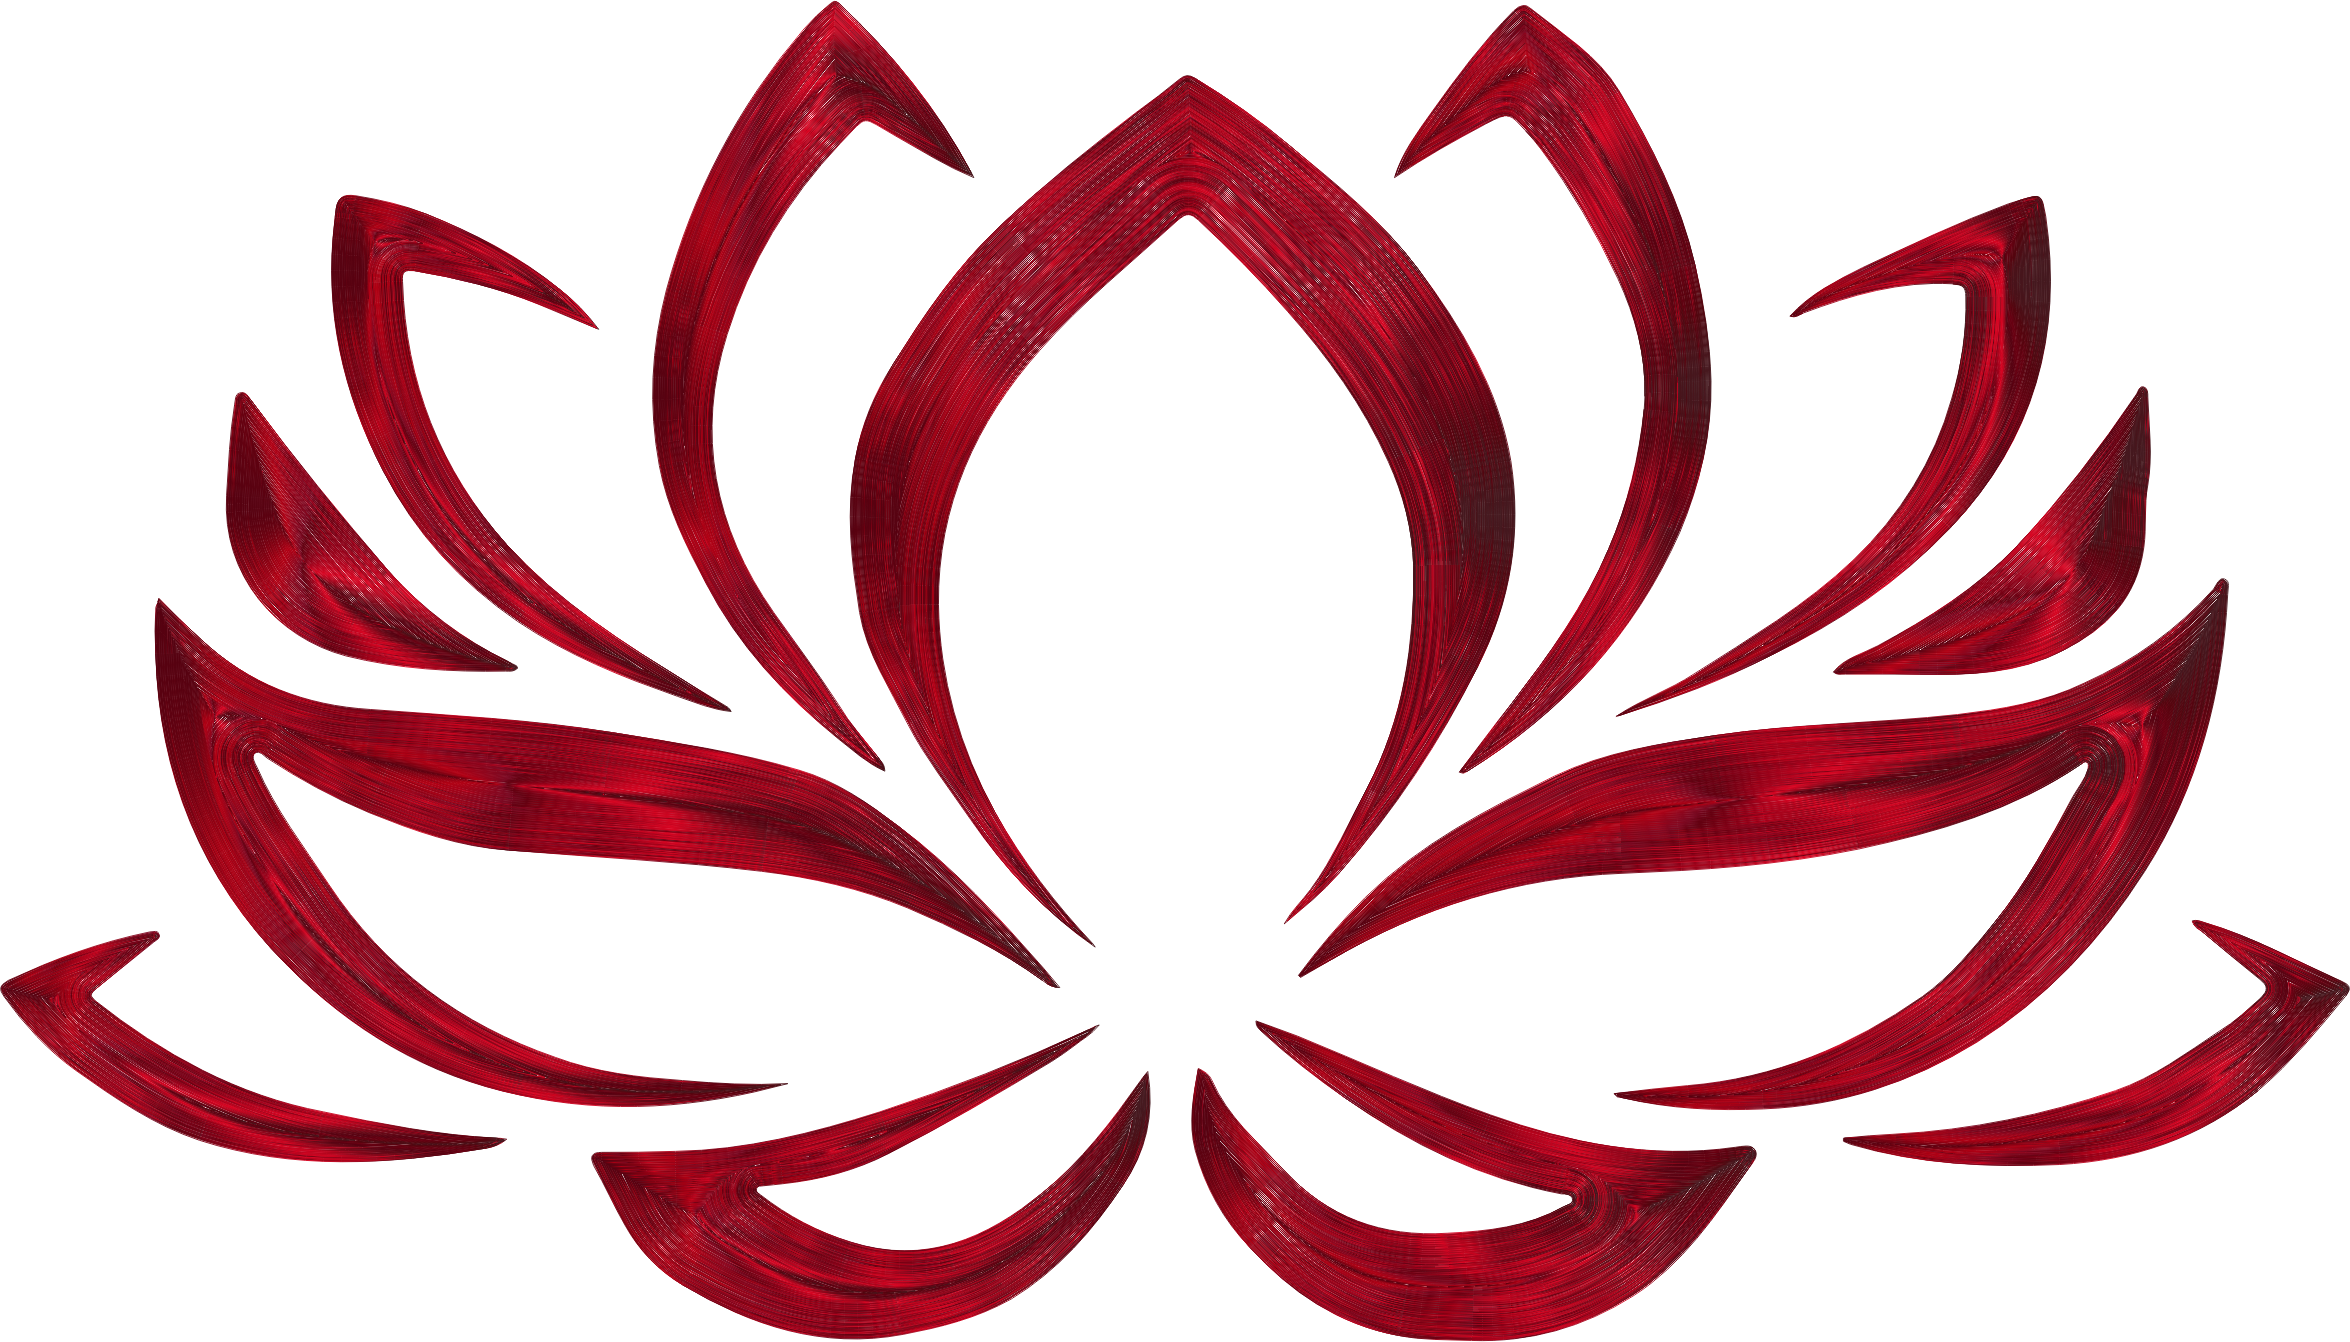 Lotus Flower No Background - Buddhism Lotus Flower Symbol (2350x1342)